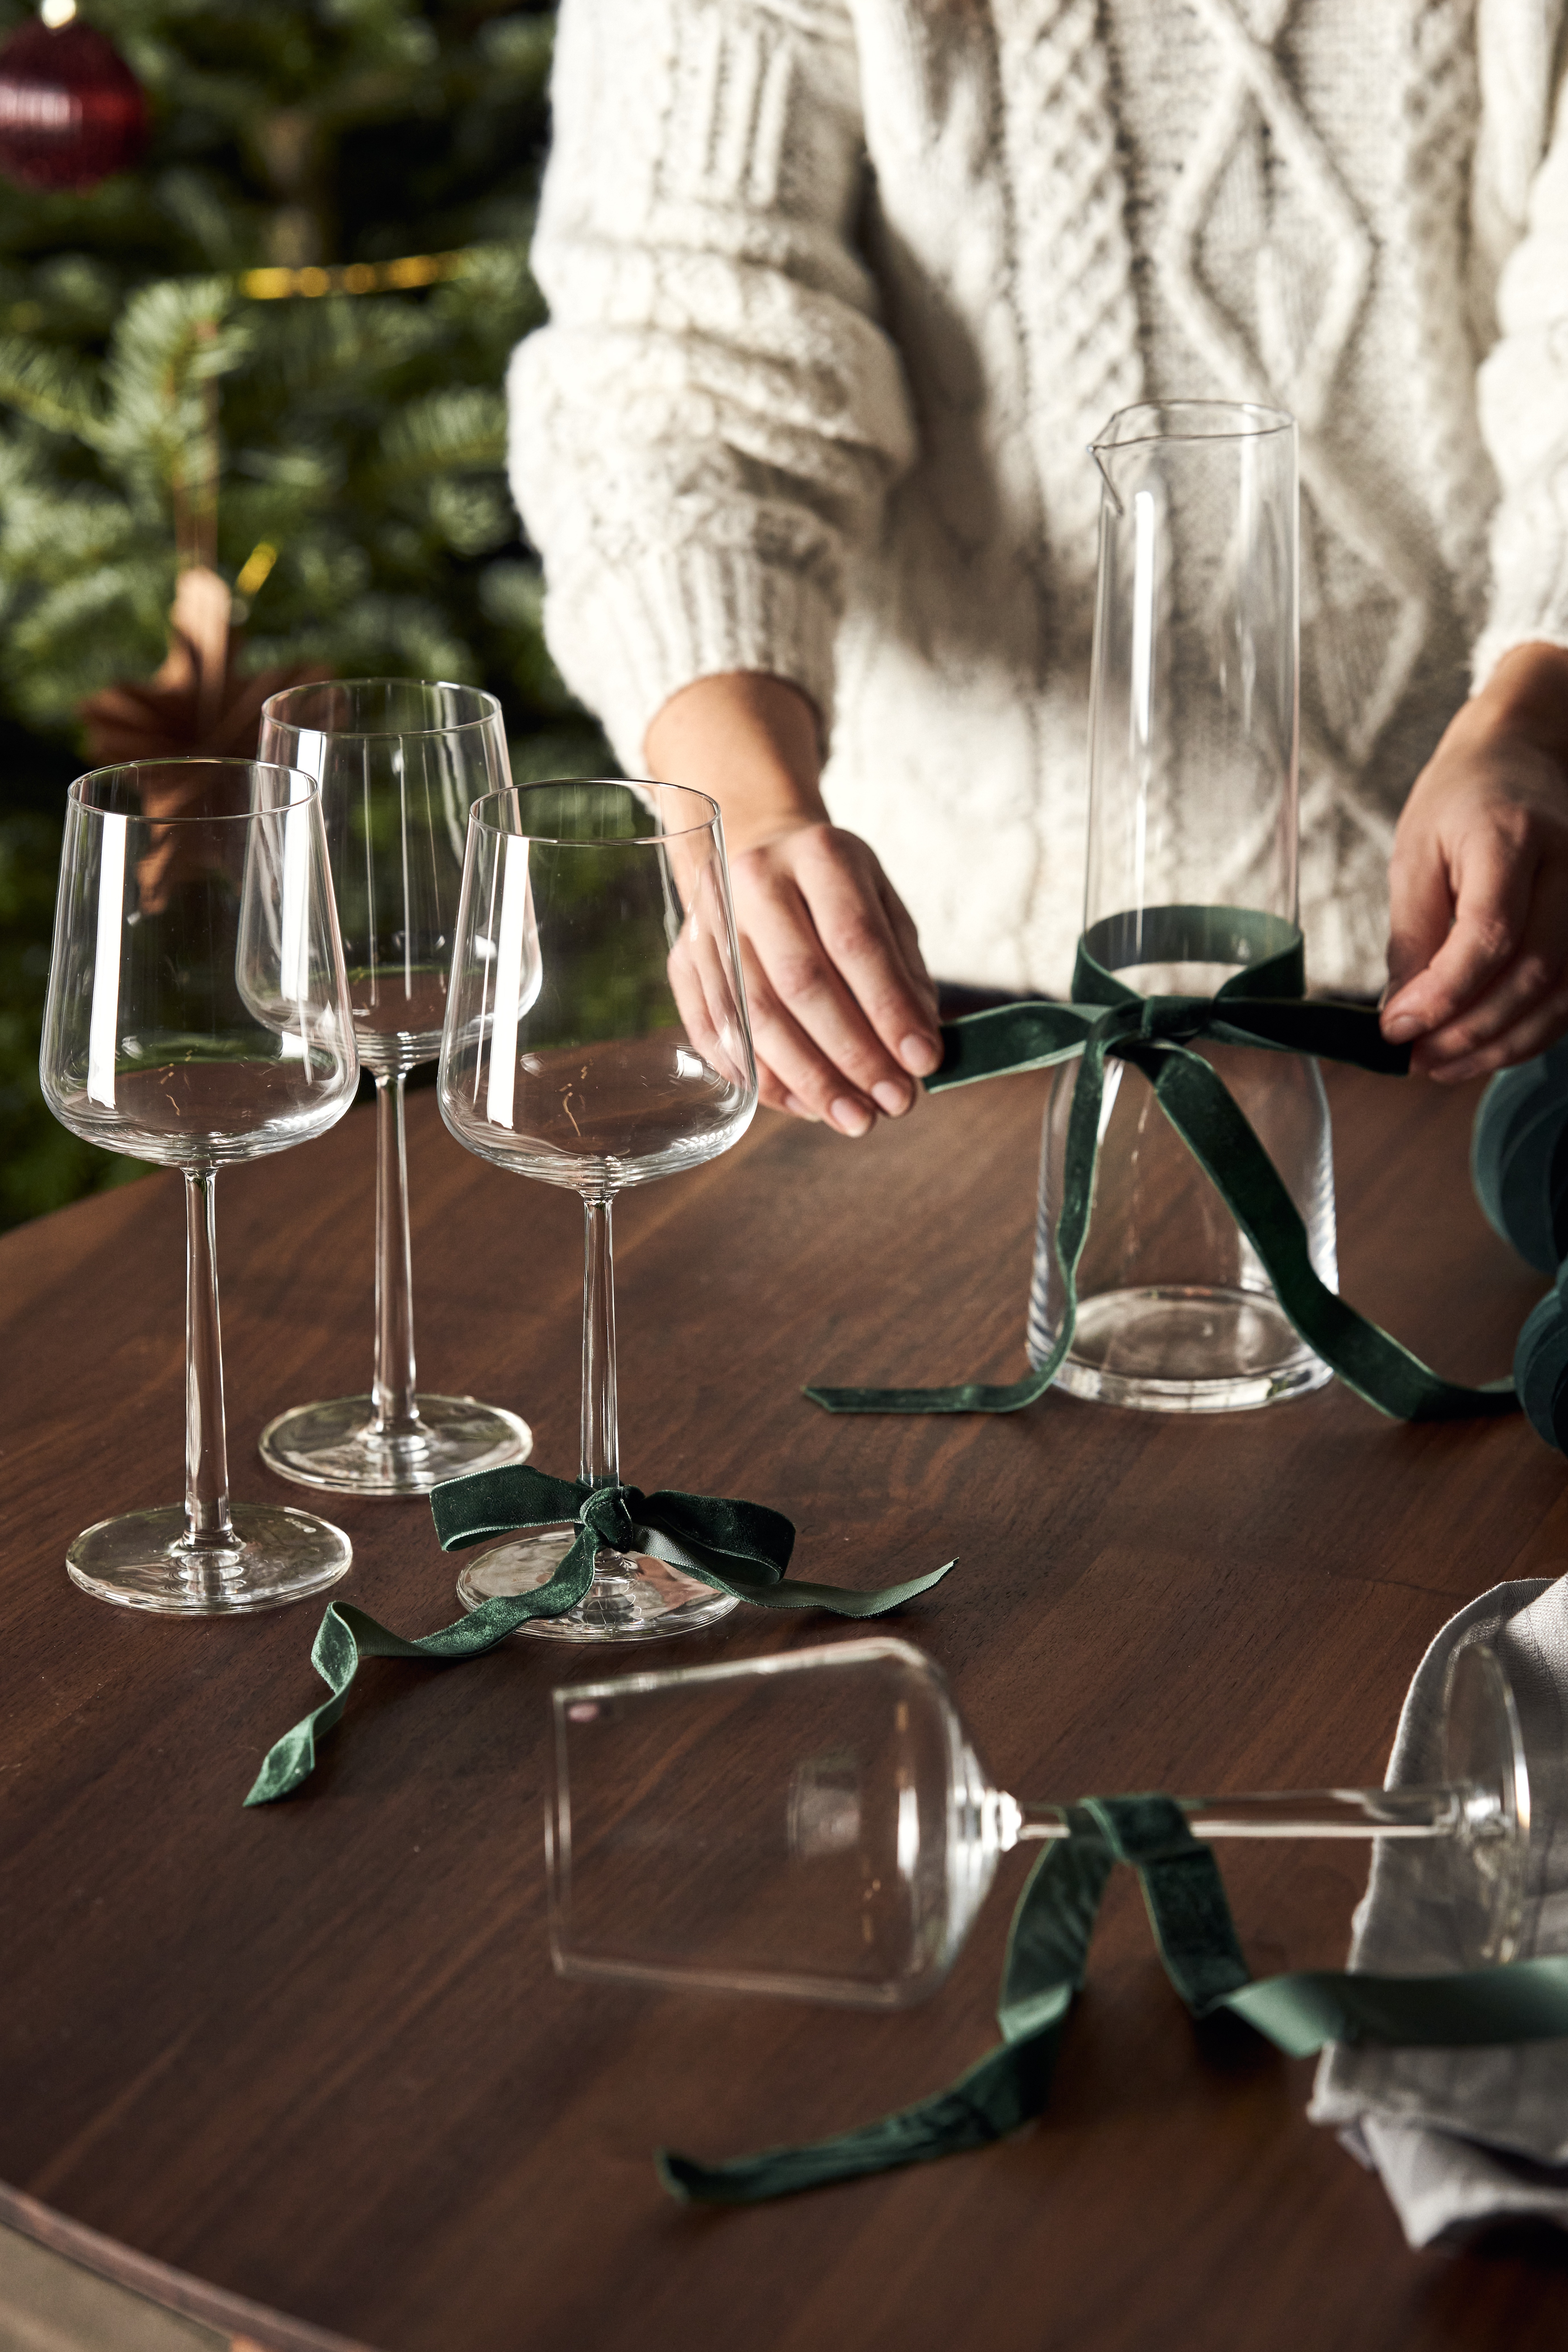 https://www.nordicnest.com/assets/contentful/p7vzp7ftmsr1/6z3A64DYu4FRGy18cQdRgS/f58cd17e662377b0dc24776707810046/nordic-gifts-christmas-gift-sets-scandinavian-design-iittala-essence-wine-glasses-carafe-green-ribbon-gift-wrapping.jpg